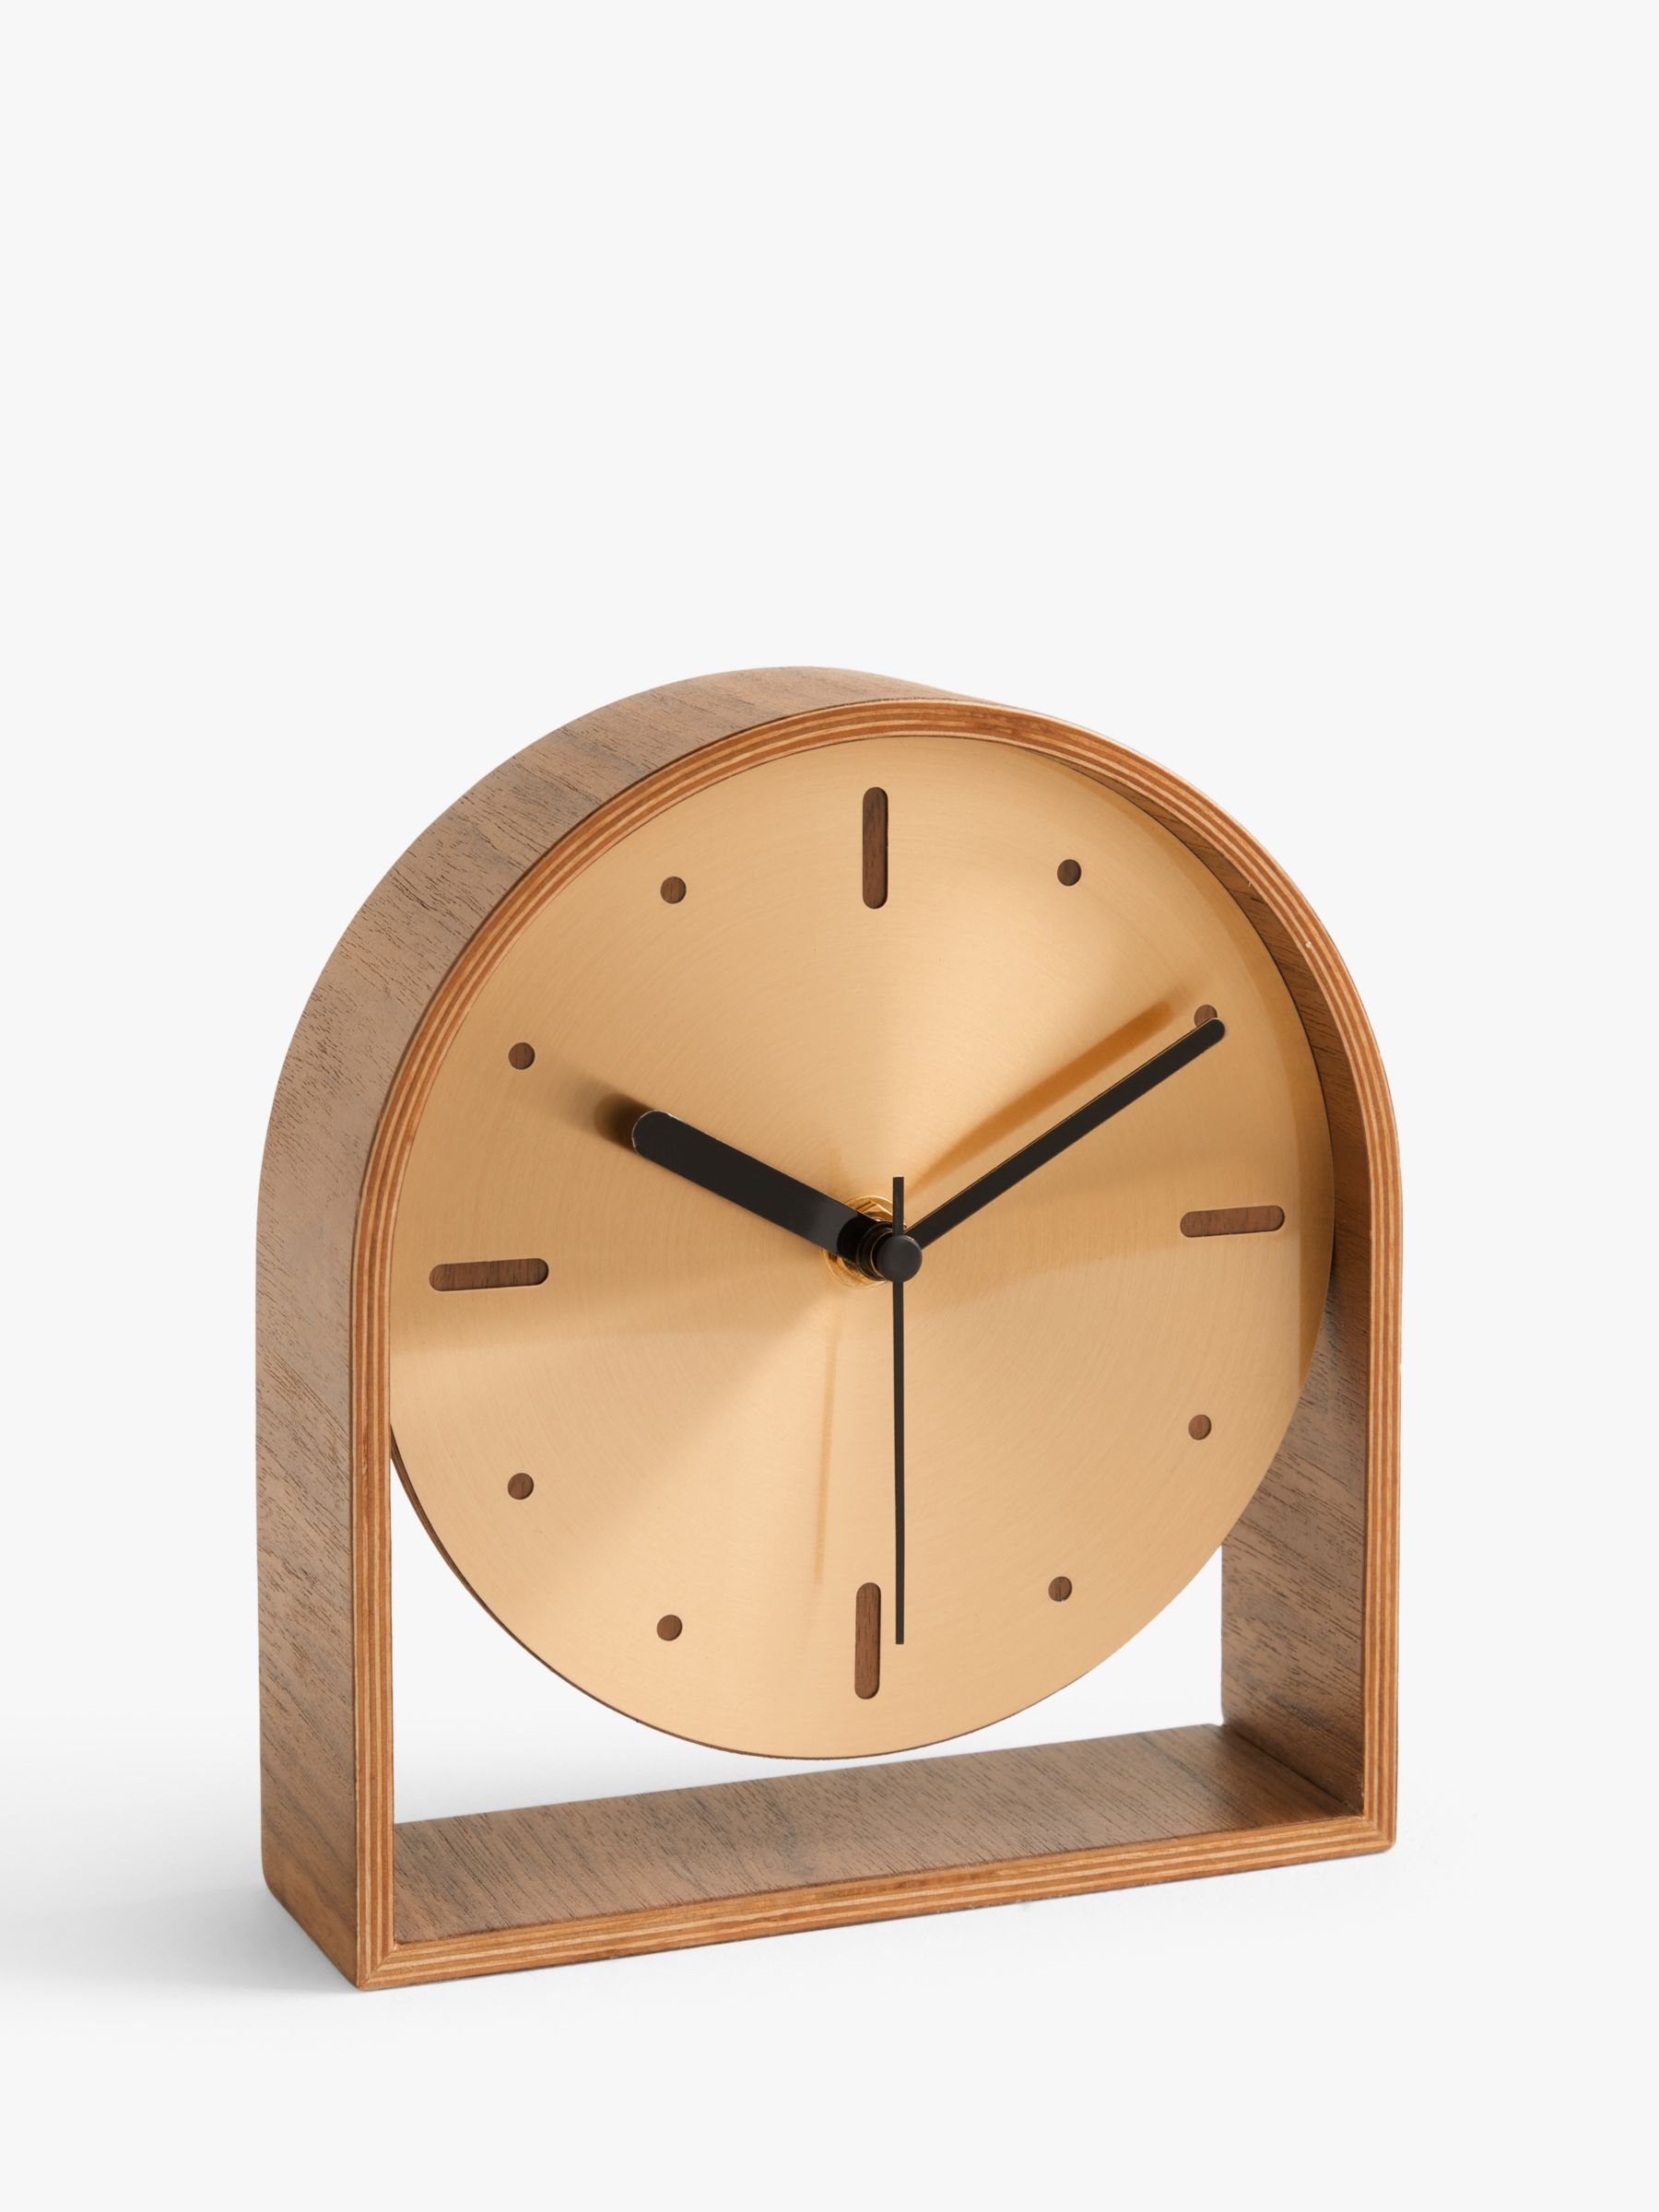 Free Art Deco Desk Clock Woodworking Plan